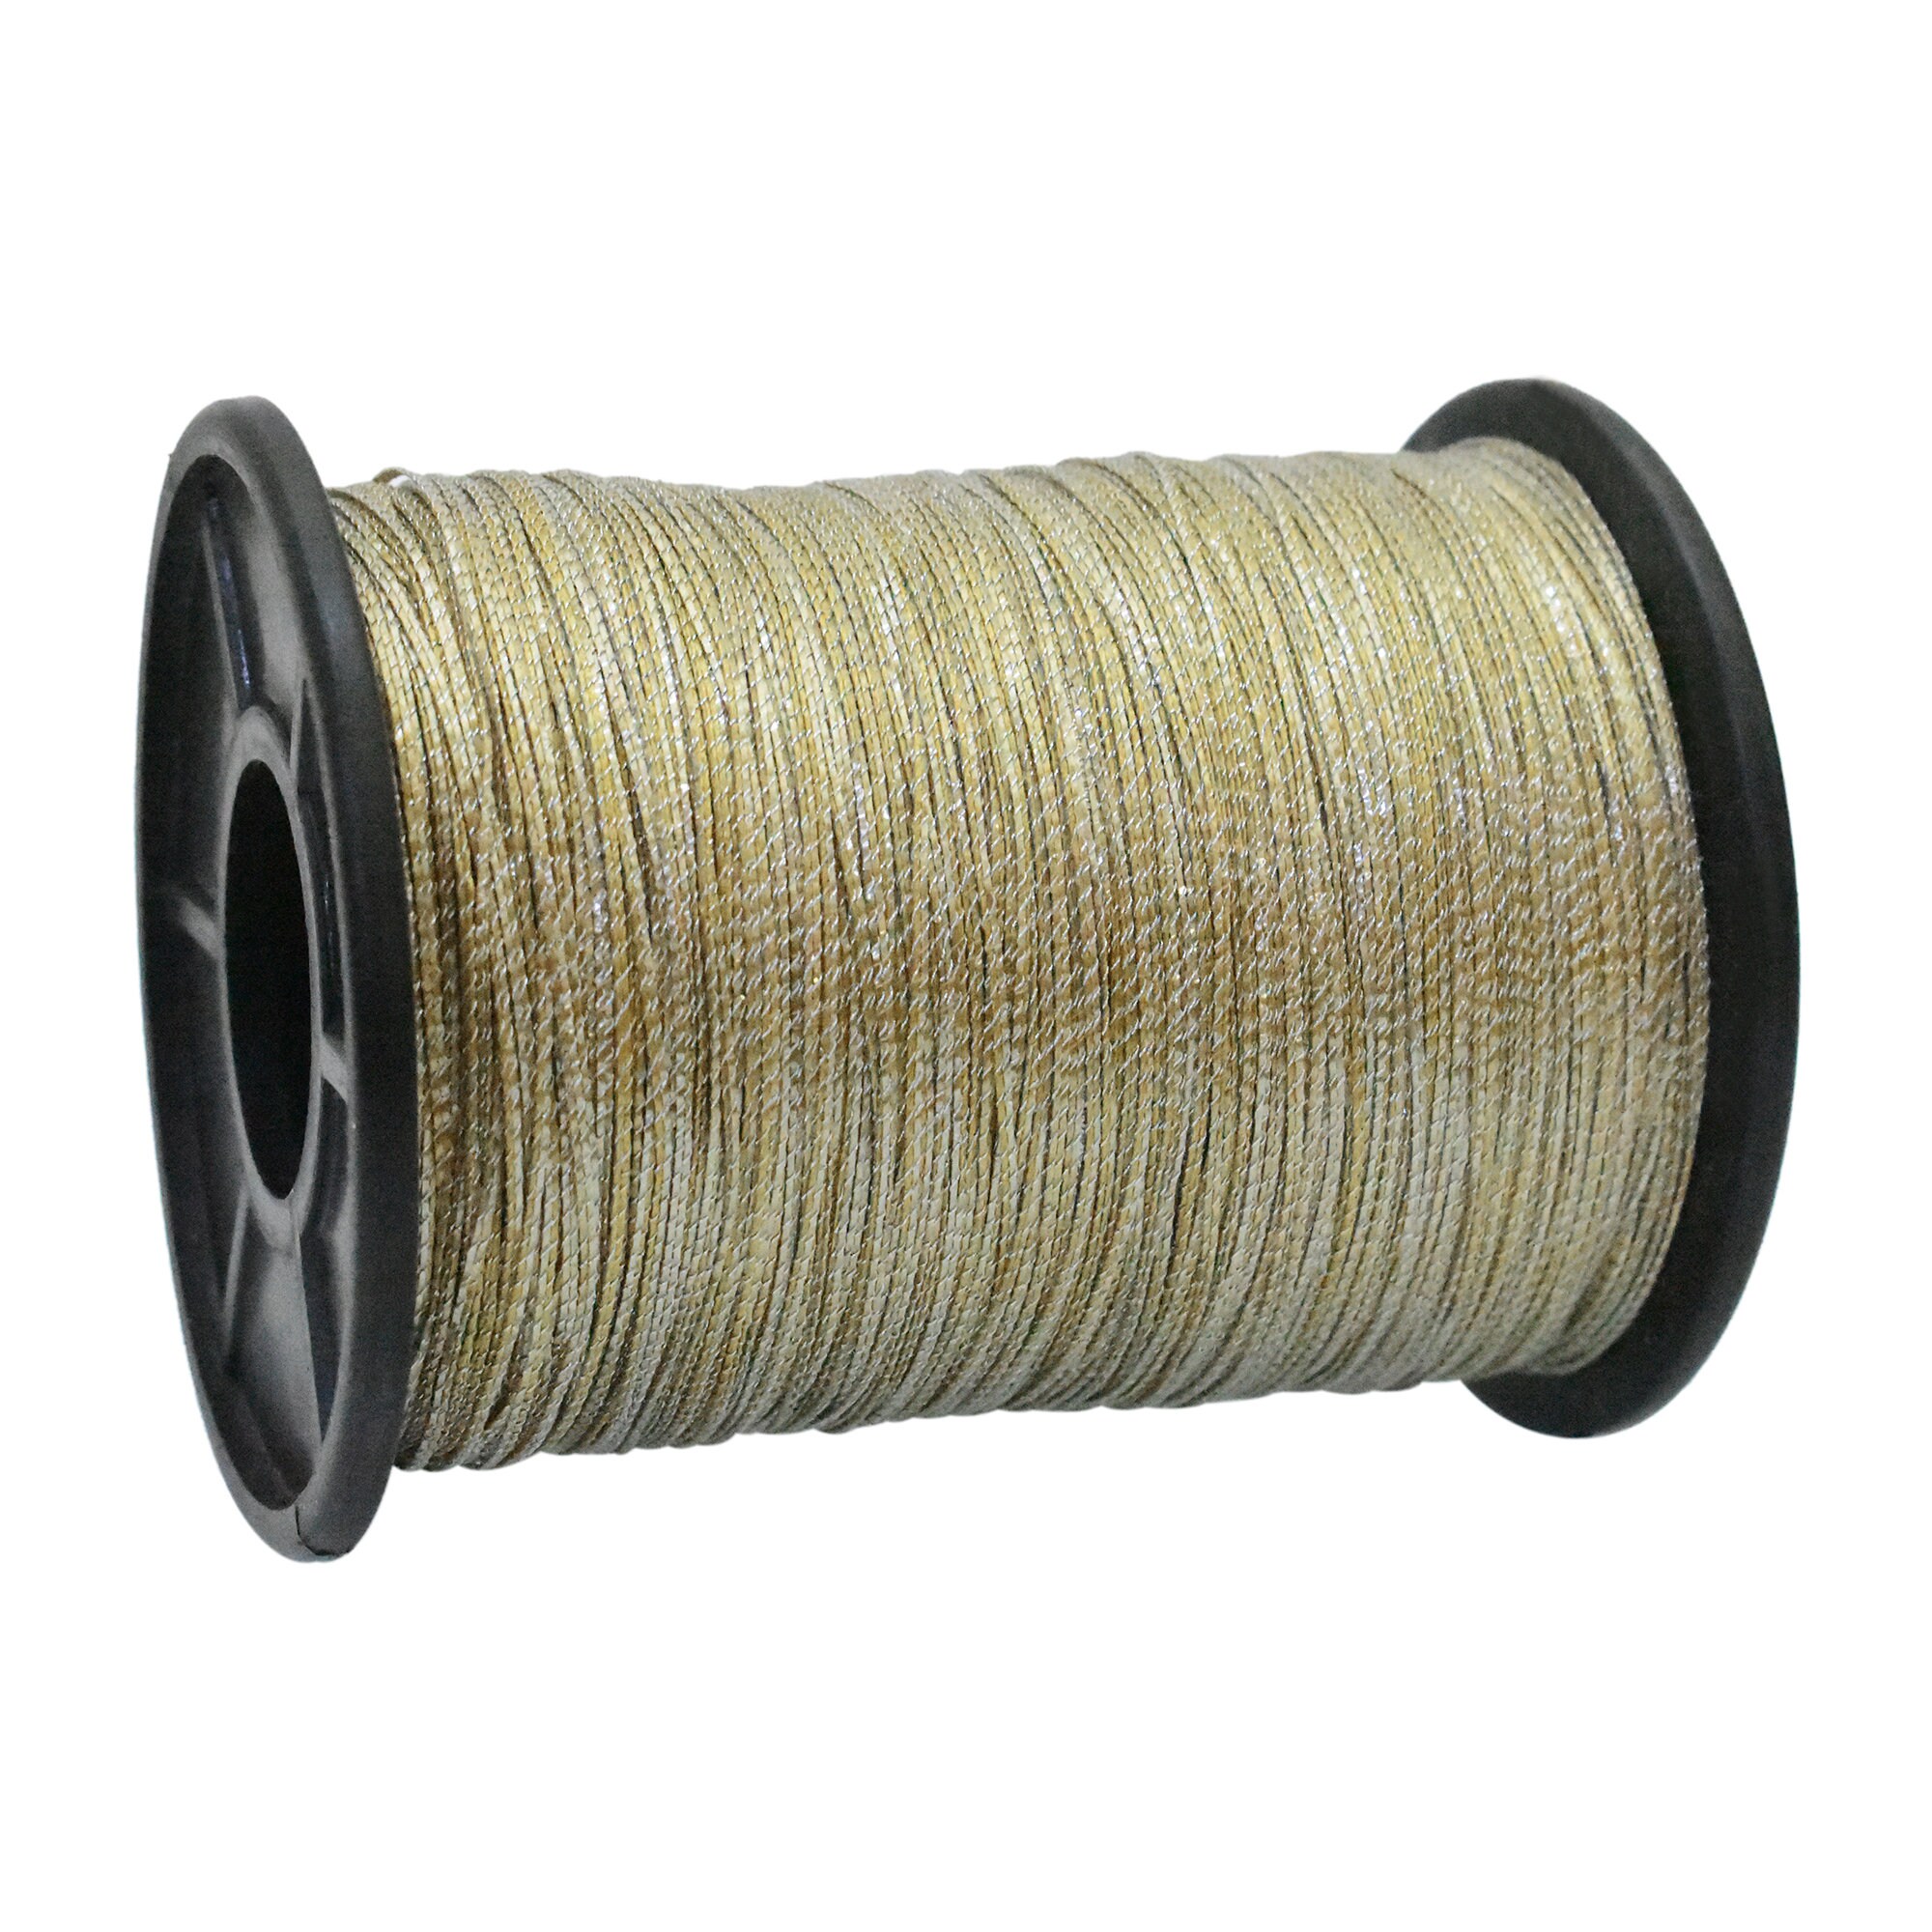 Maine Thread, Twisted Waxed Cord, 70 yard spool, Olive 